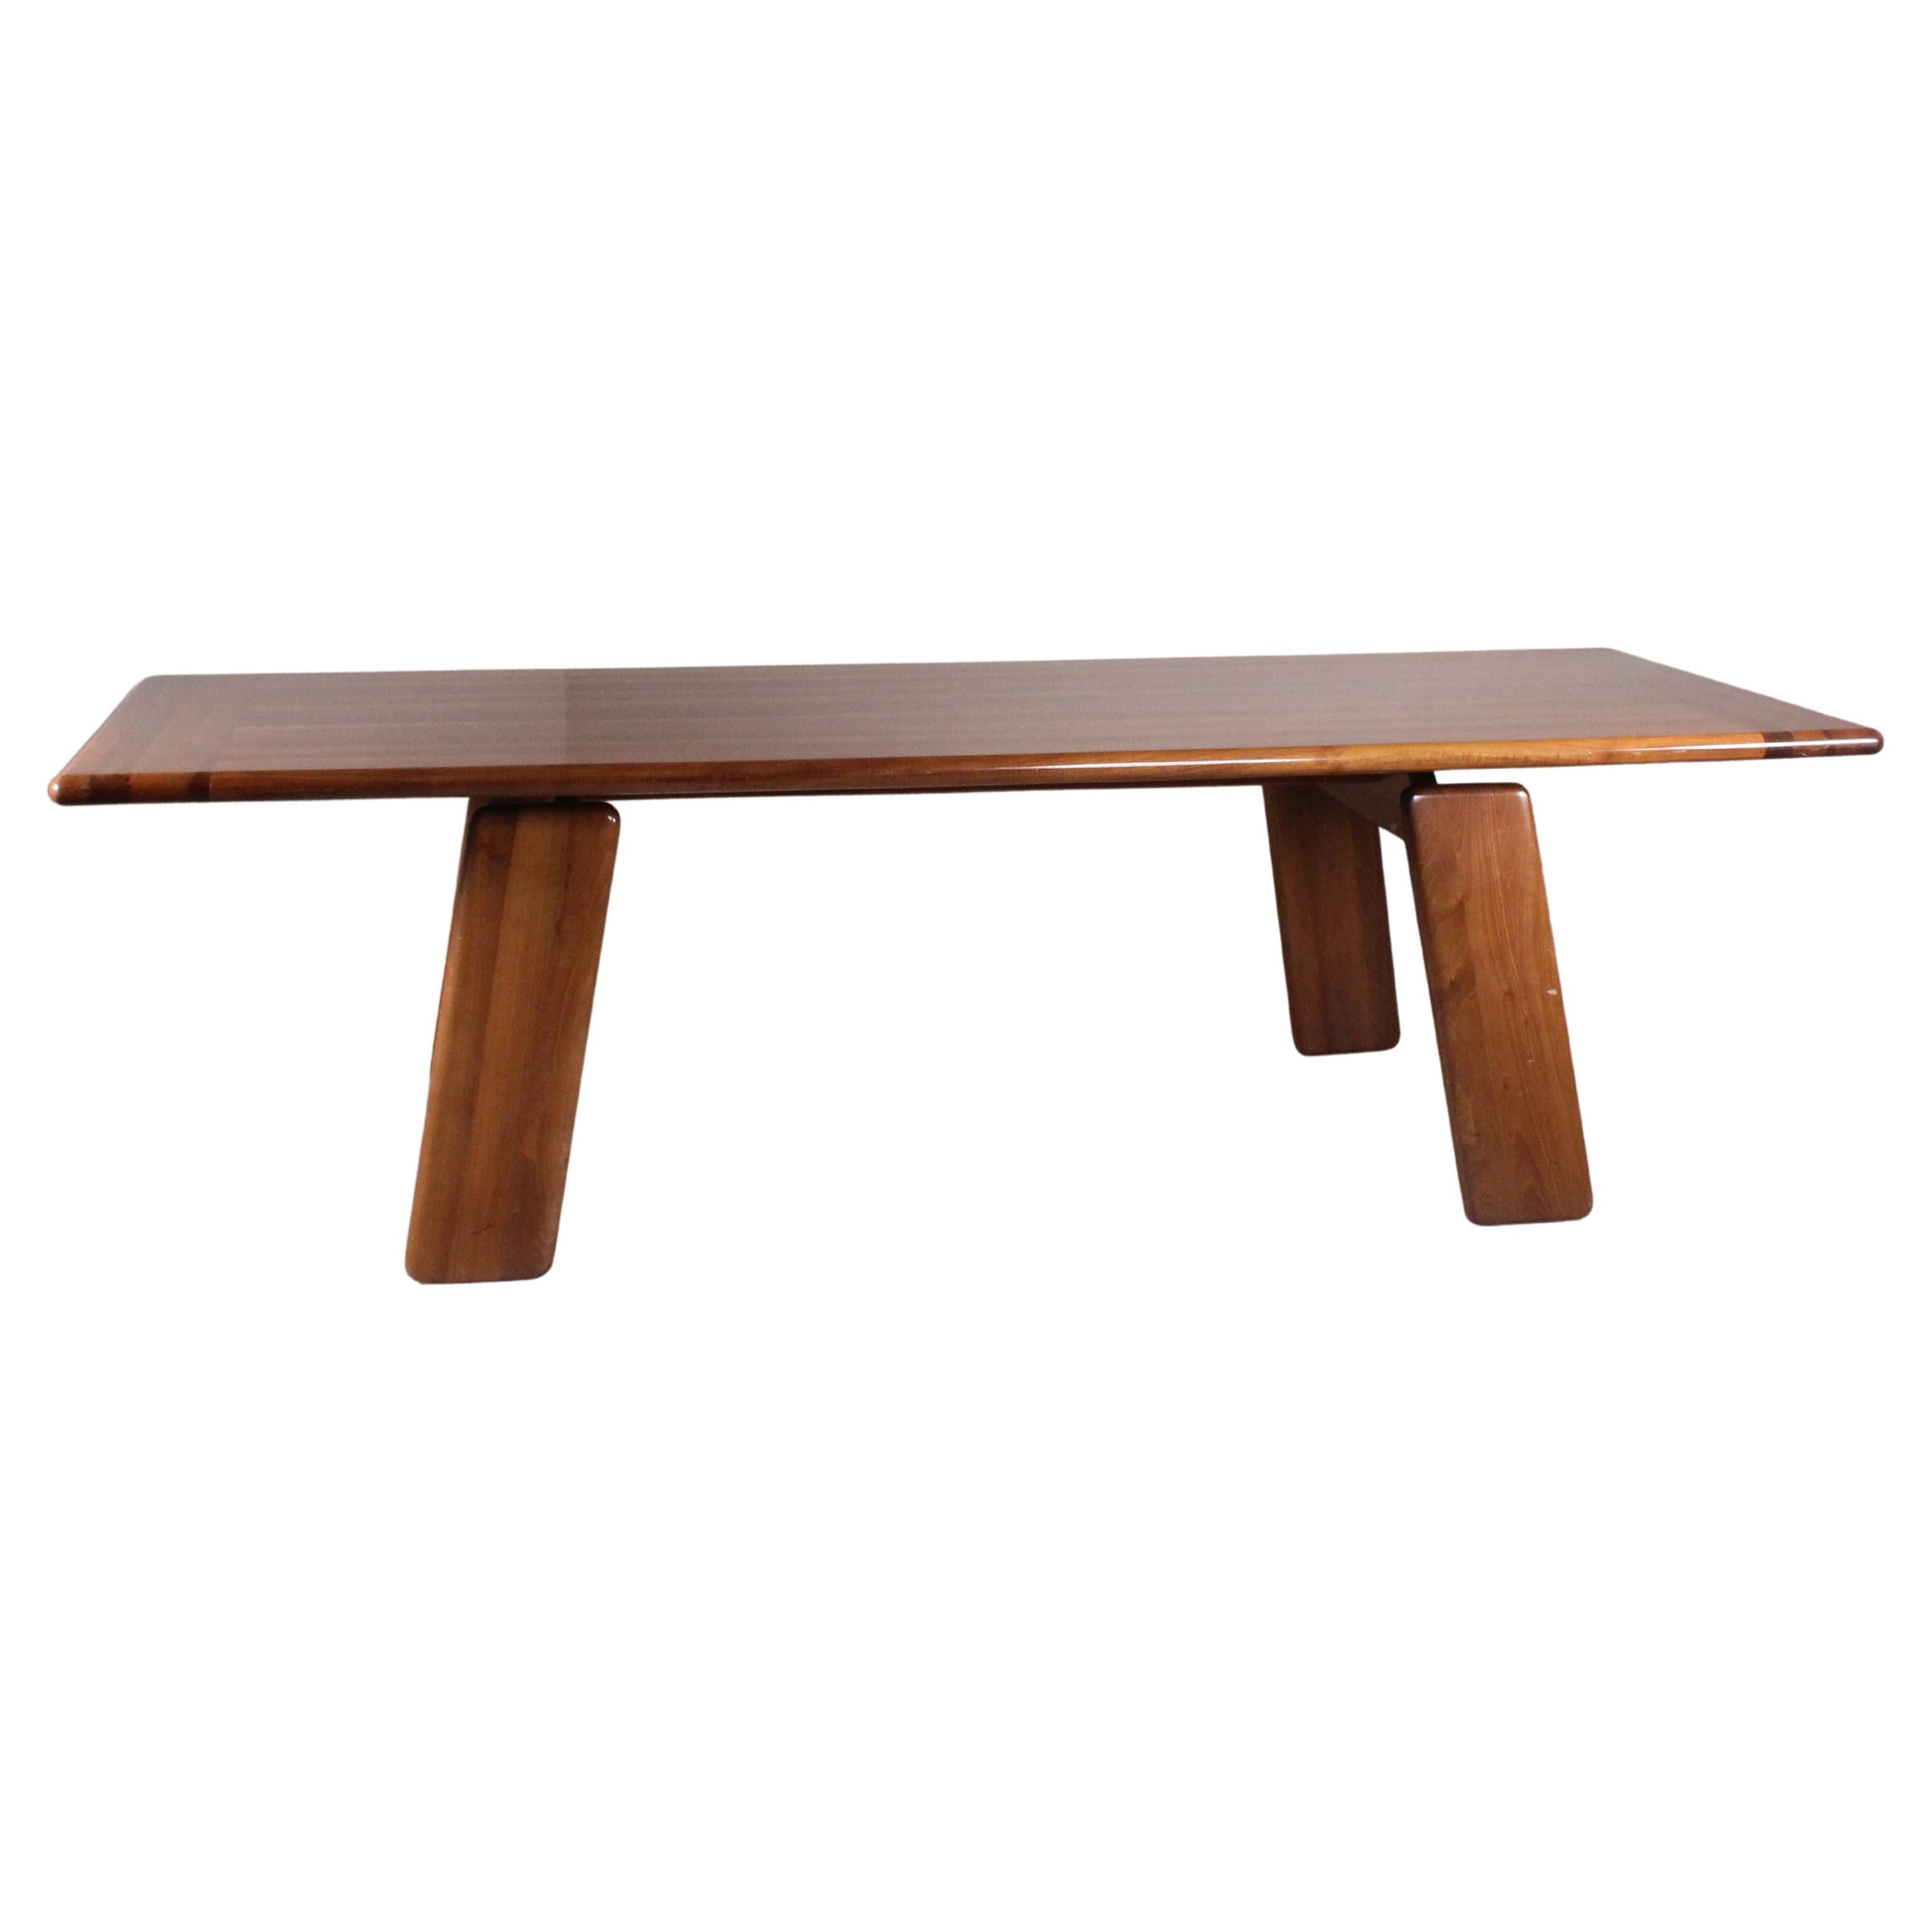  Wooden table, Mario Marenco, MobilGirgi, 1960 For Sale